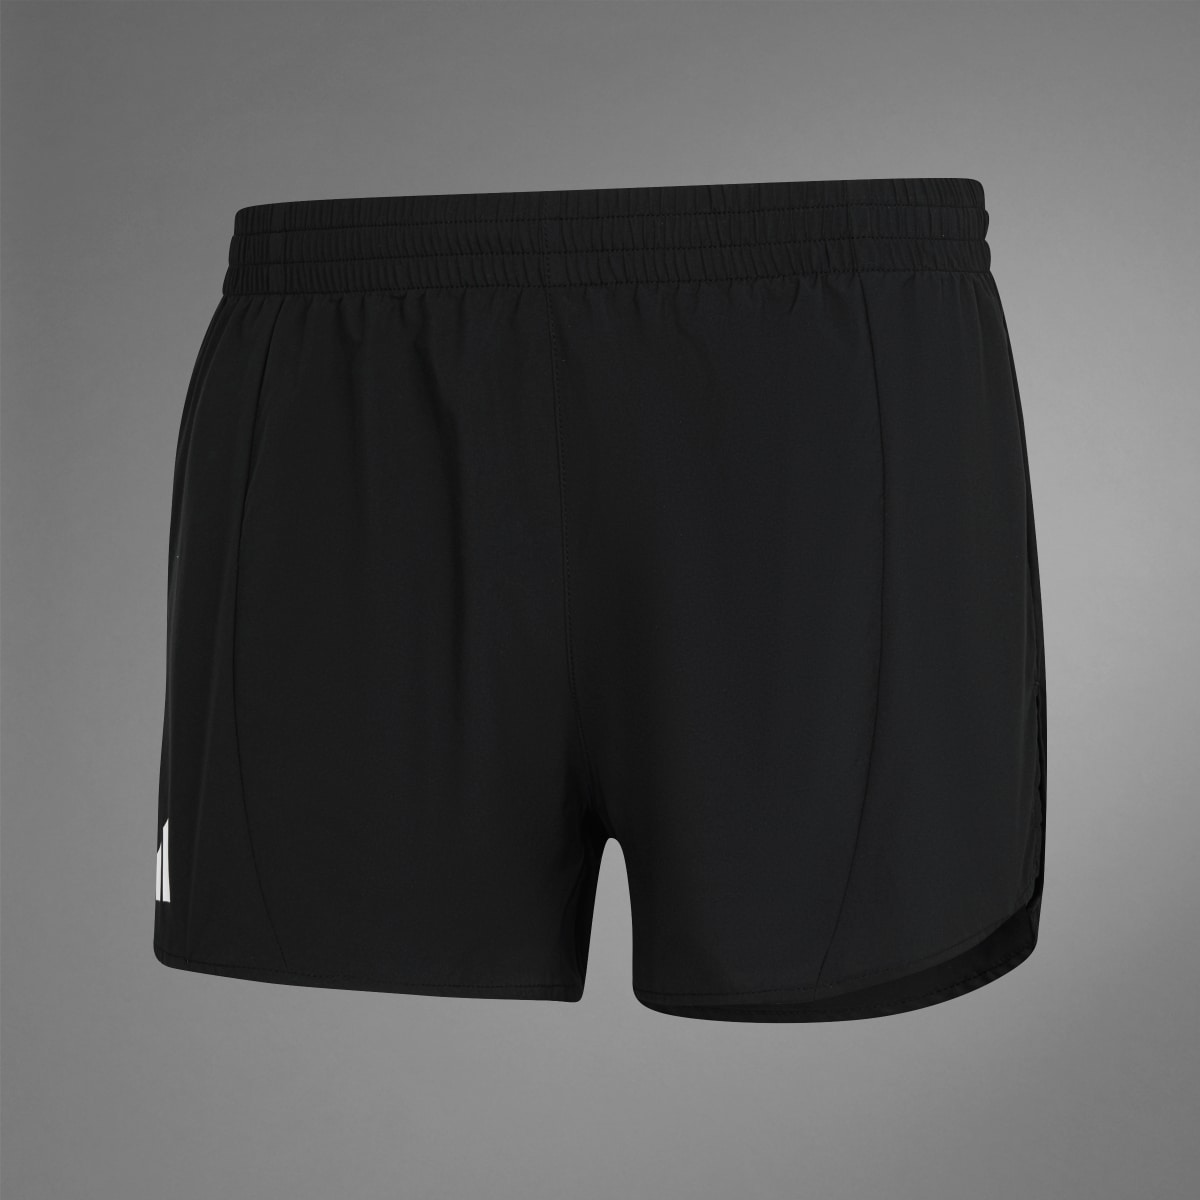 Adidas Adizero Essentials Running Shorts. 9